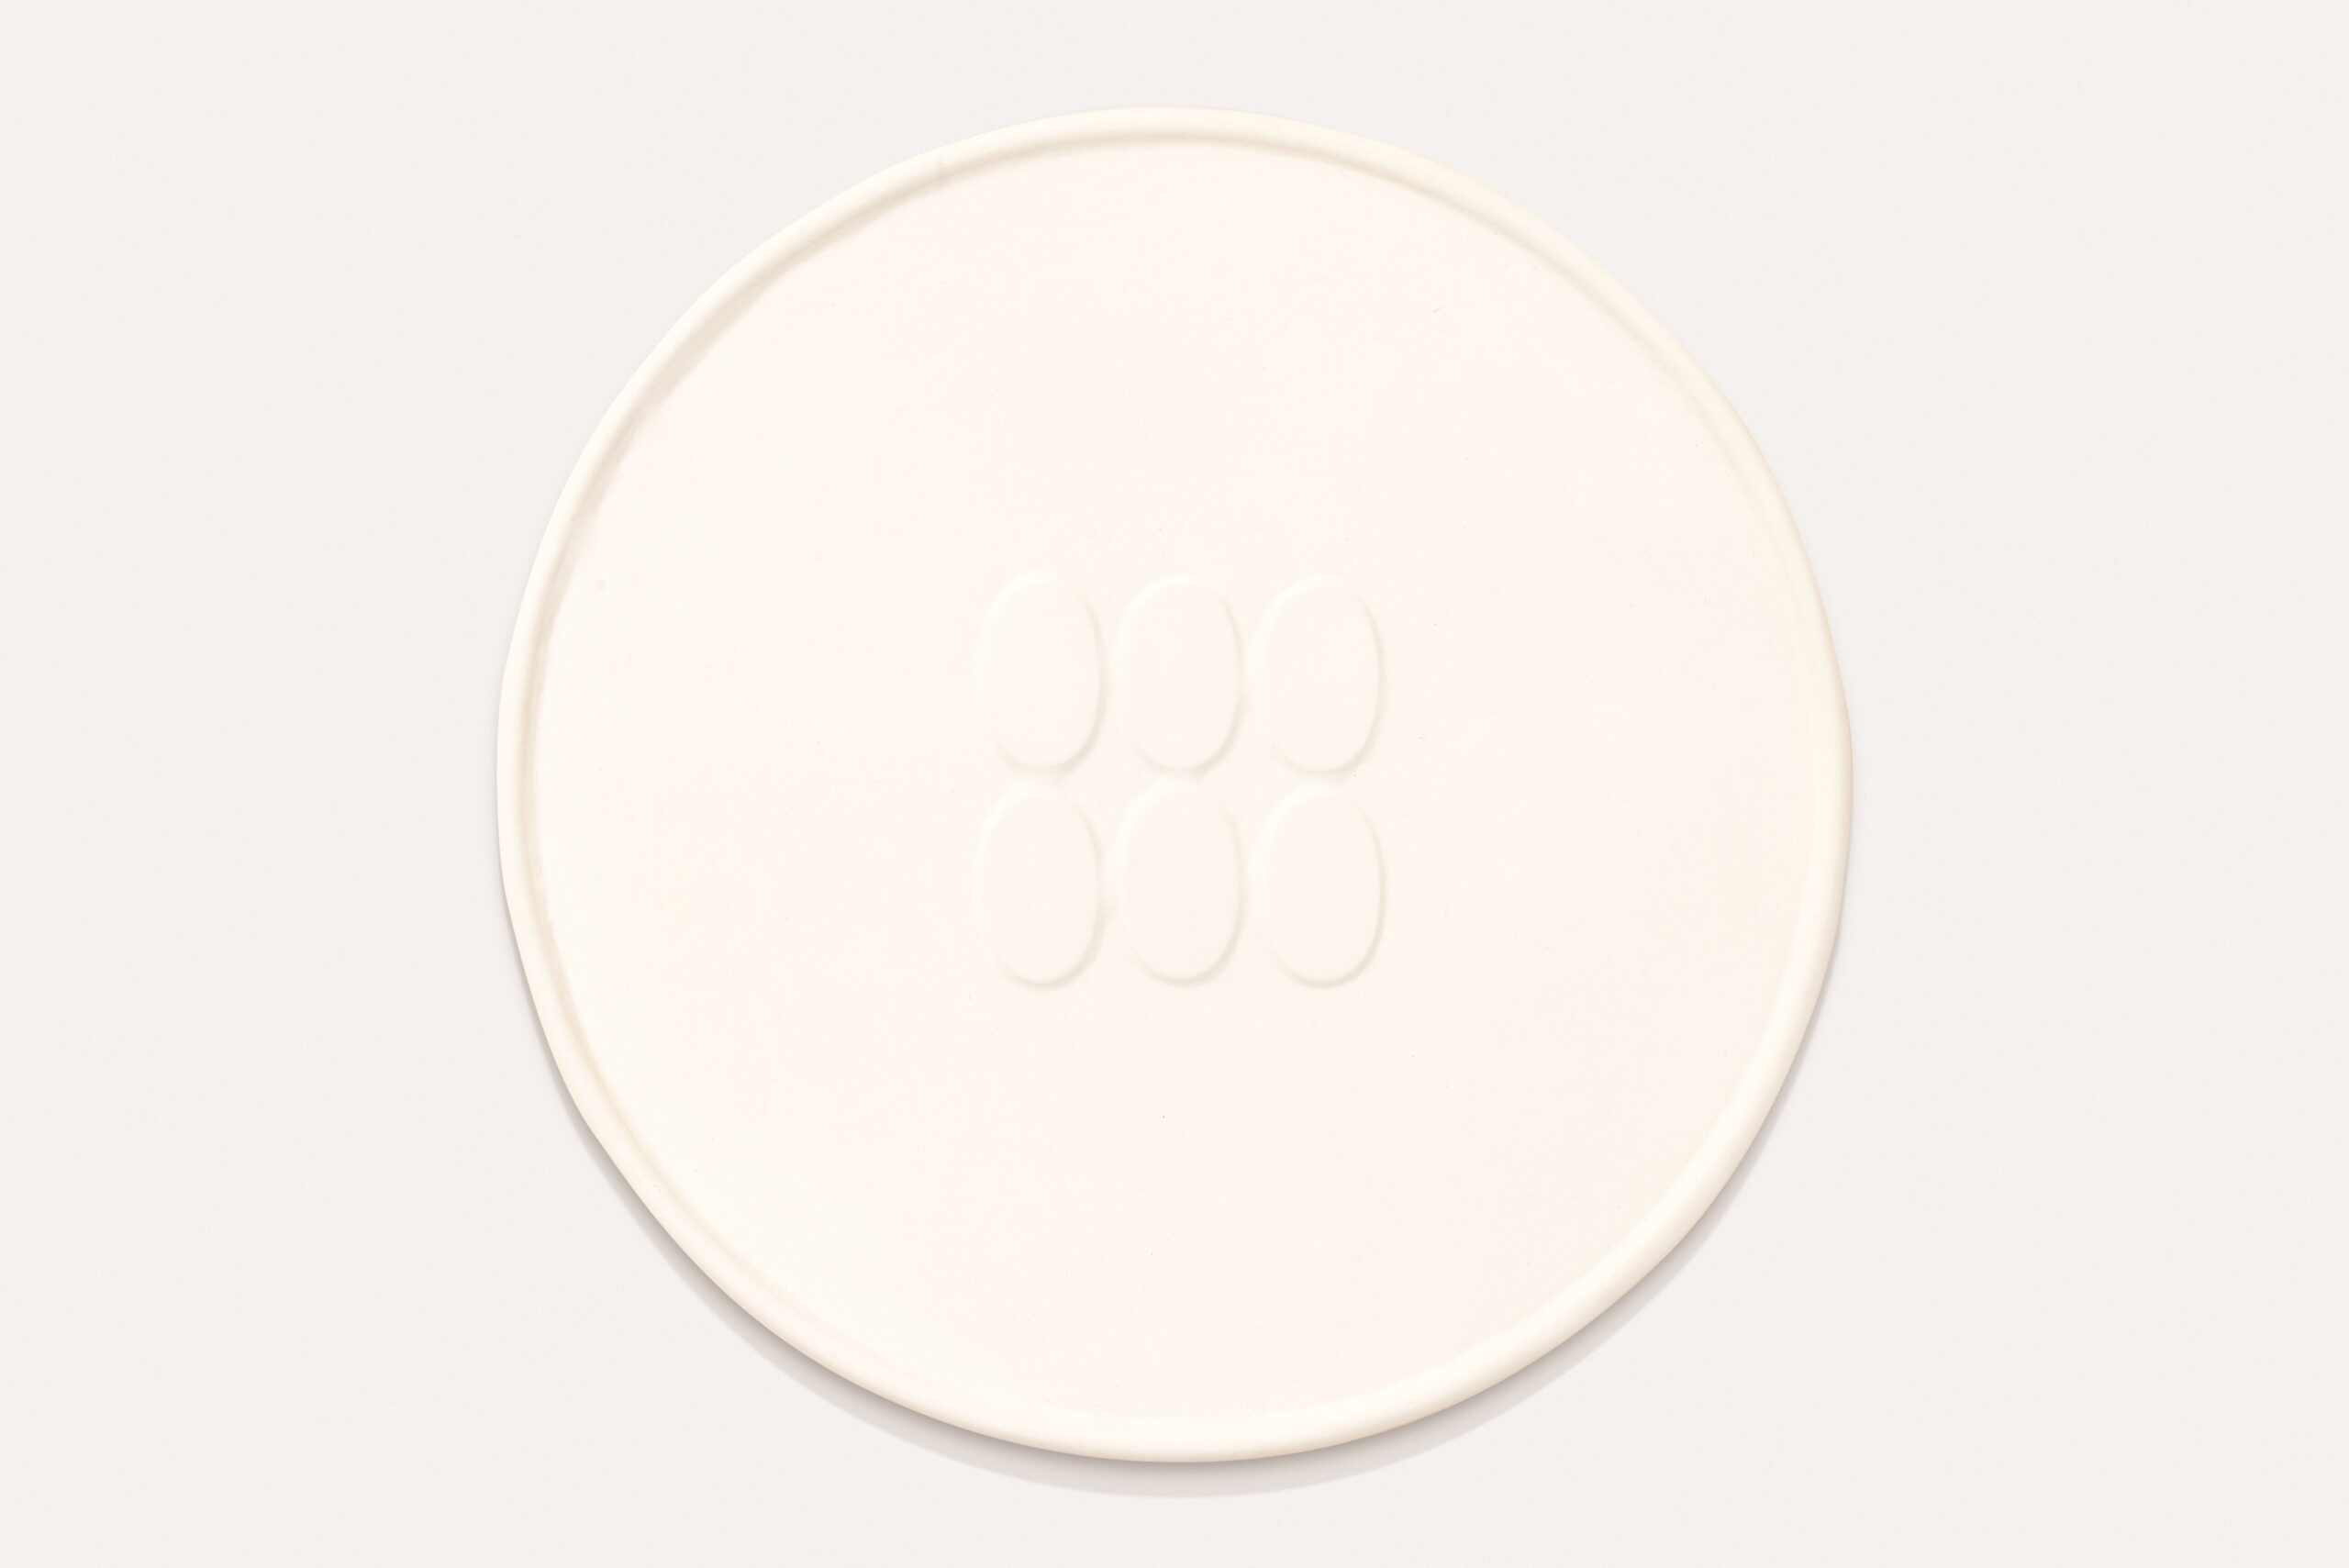 Turi Simeti, 6 ovali bianchi, acrilico su tela,1966